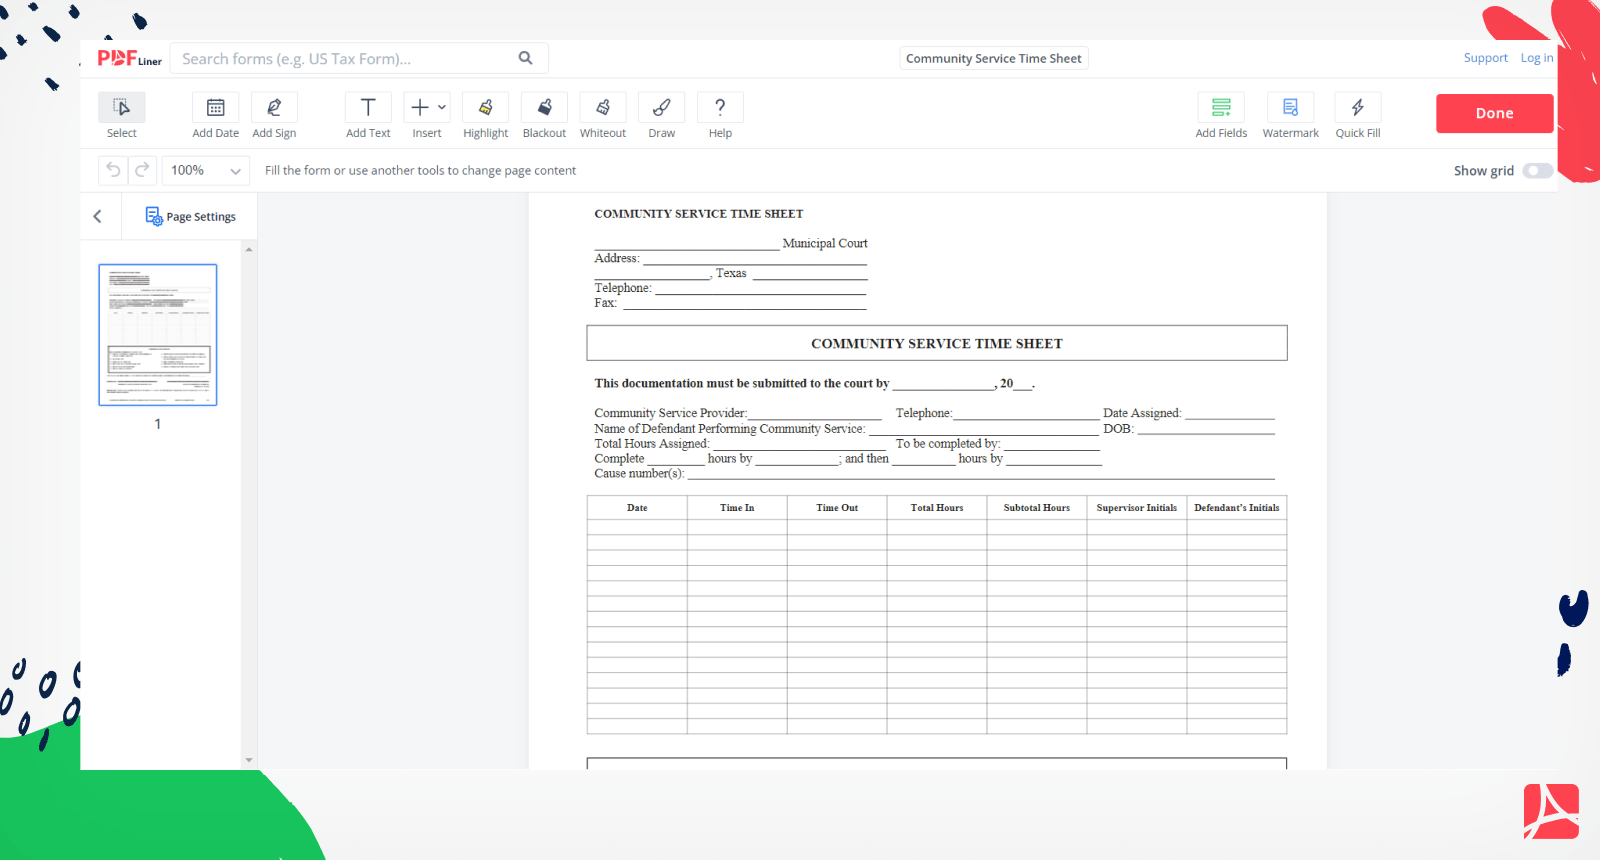 Community Service Time Sheet Form Screenshot